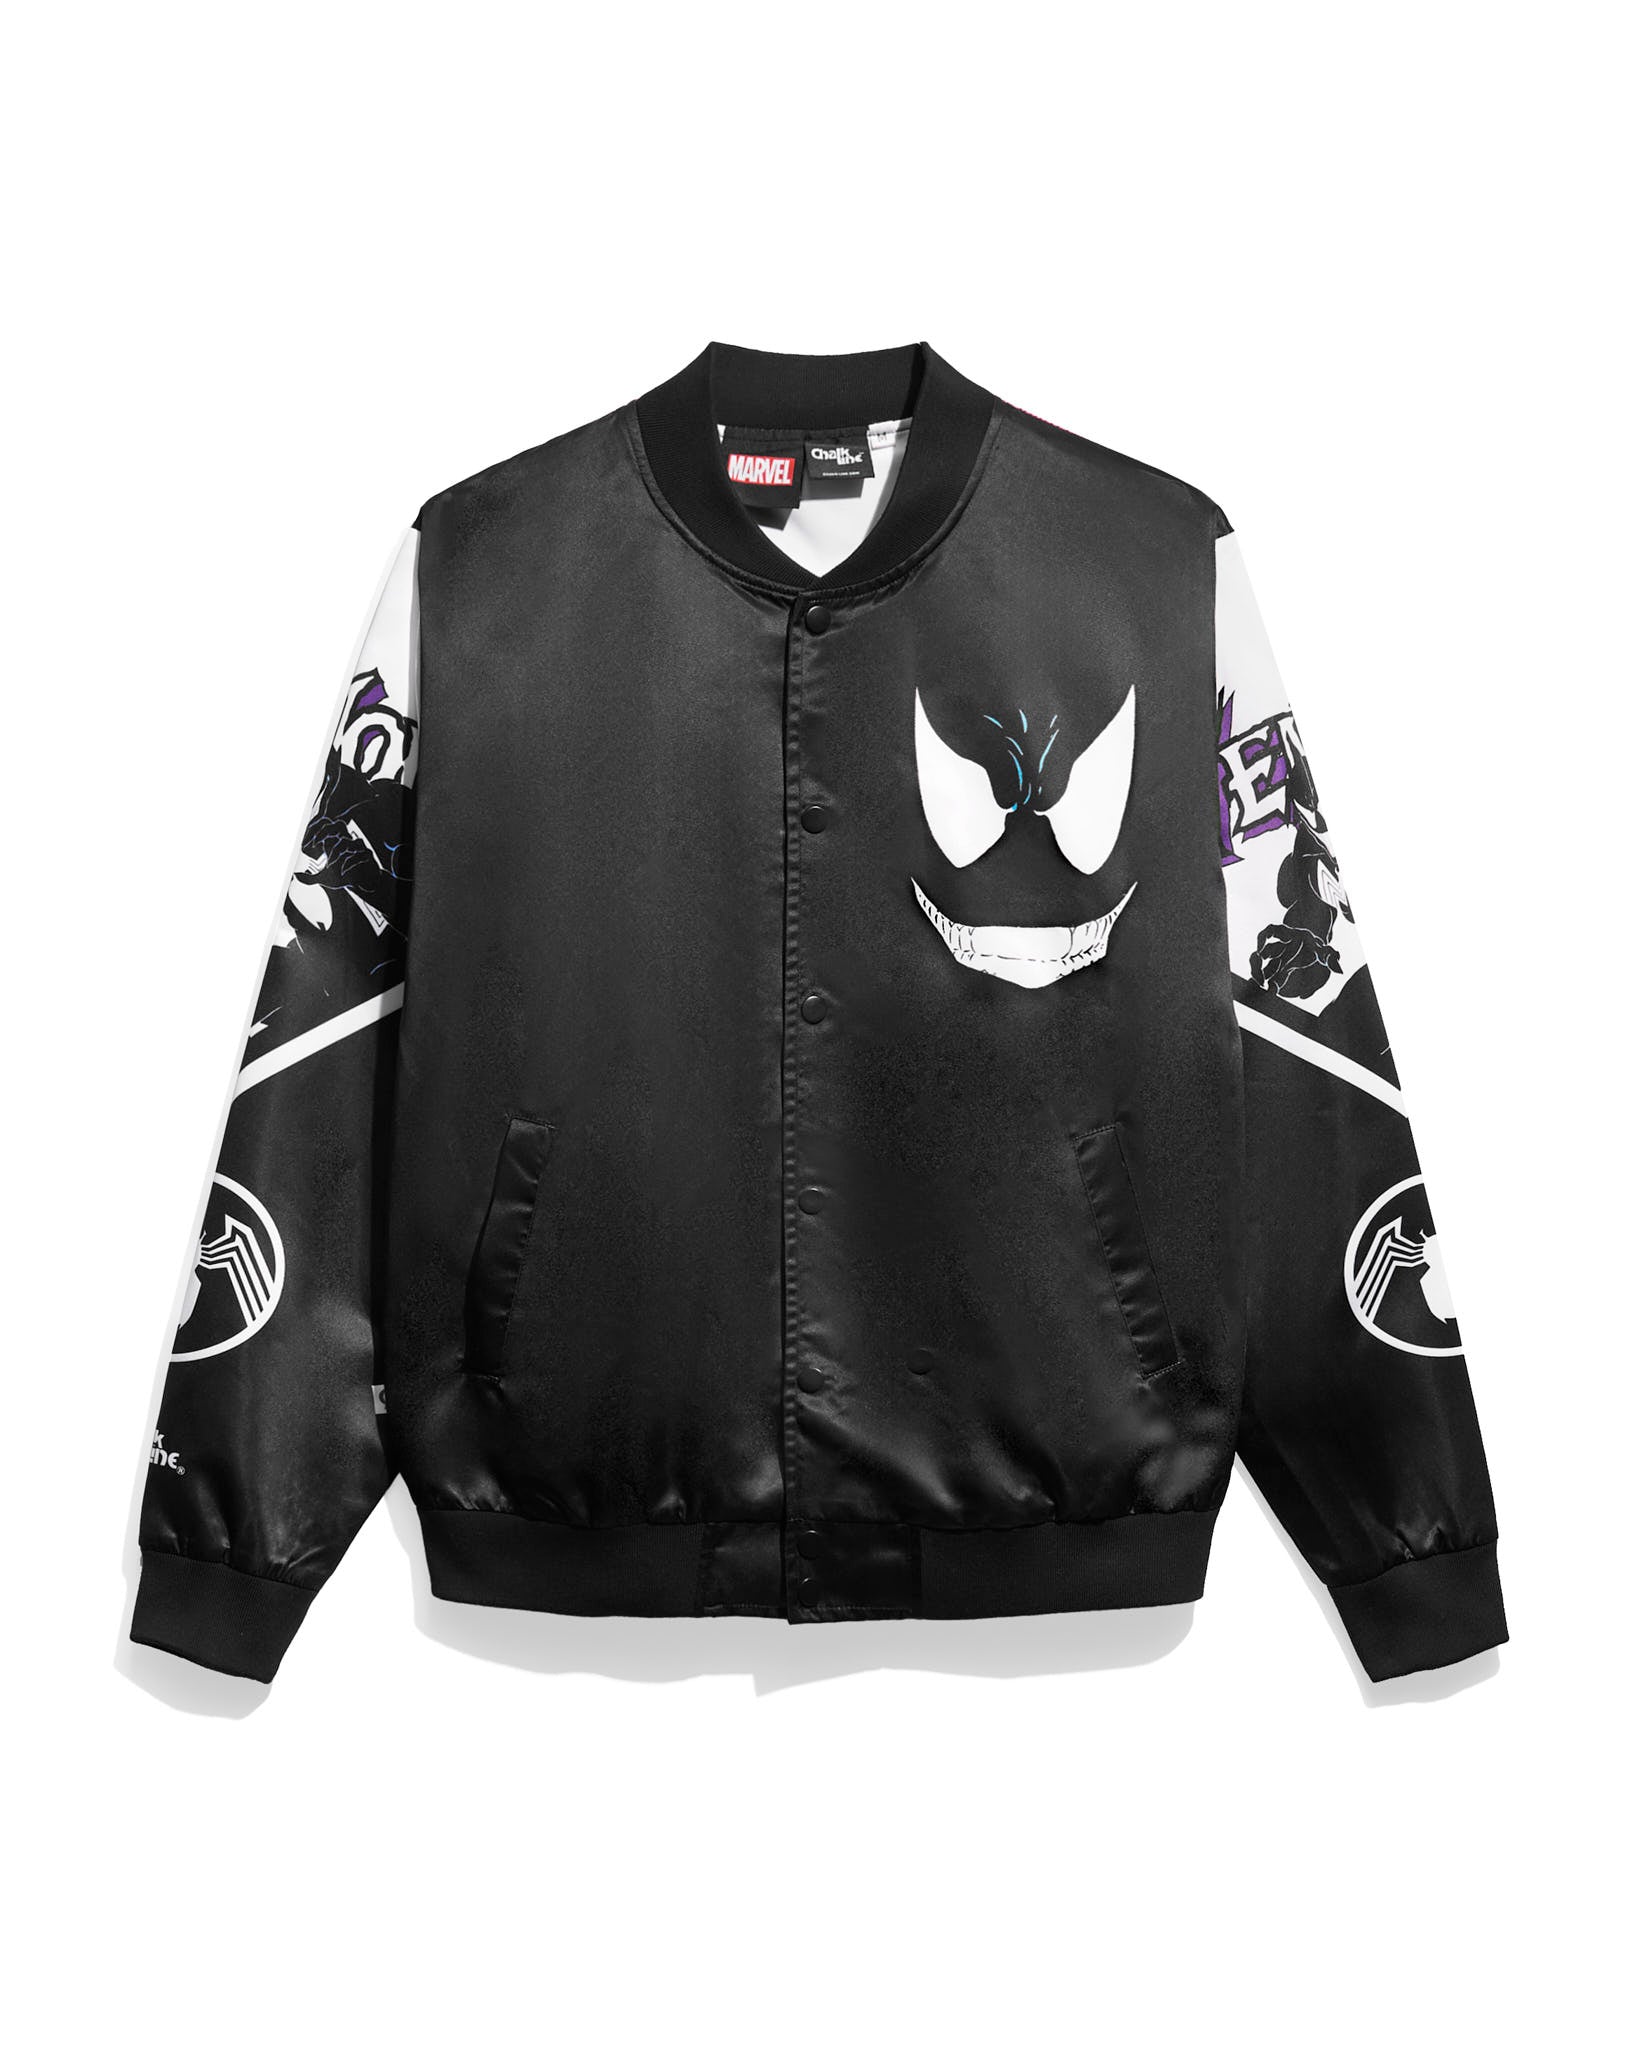 Venom and Spider-Man Fanimation Jacket